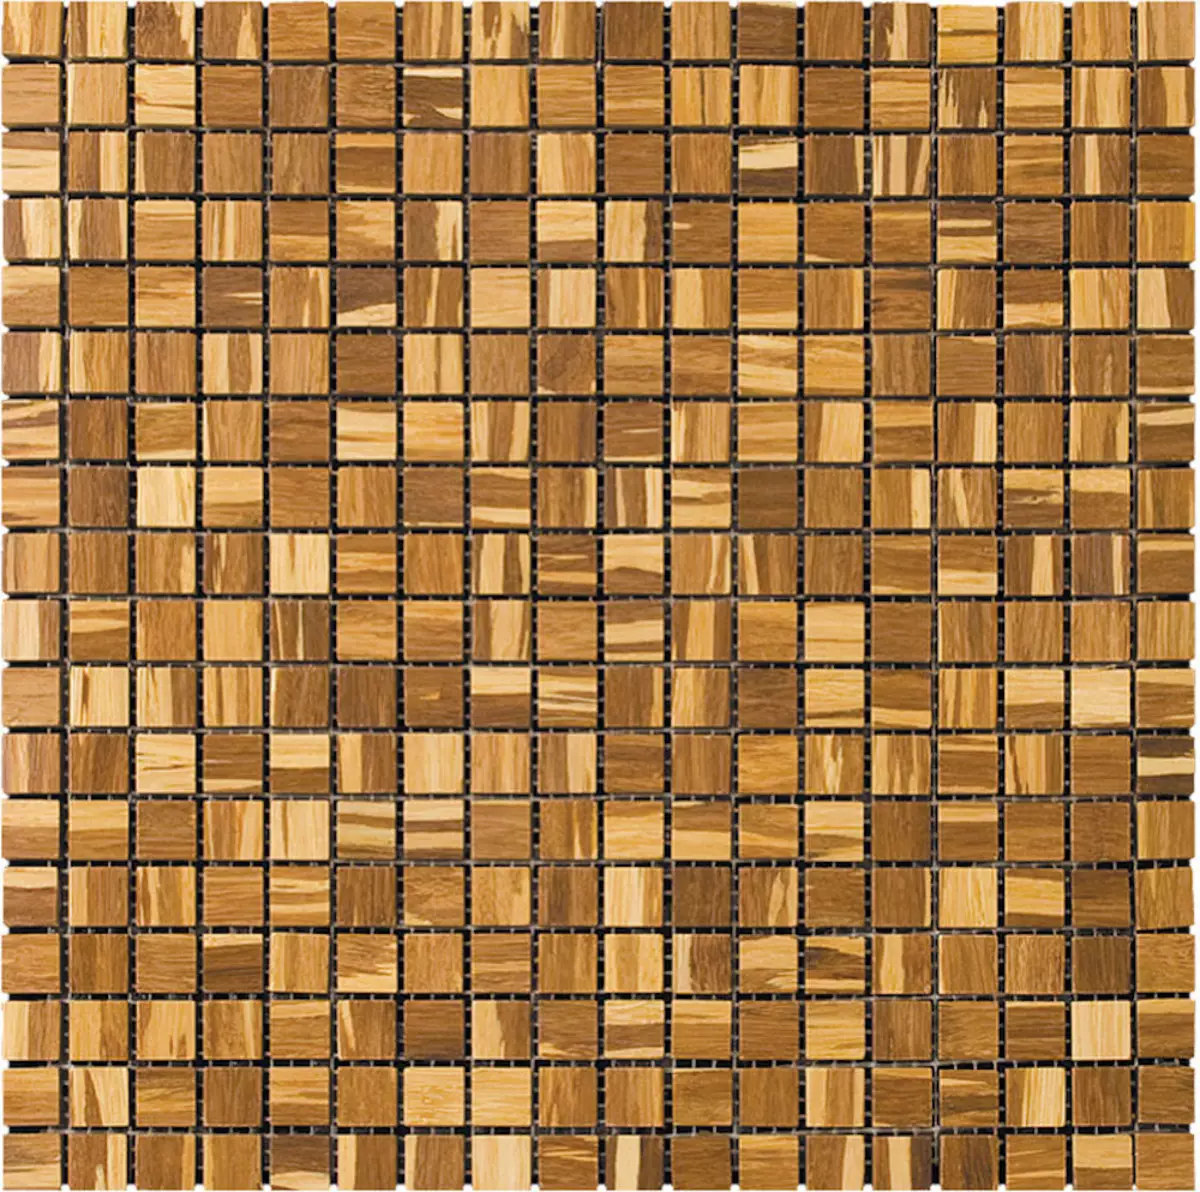 Mosaic of Wood